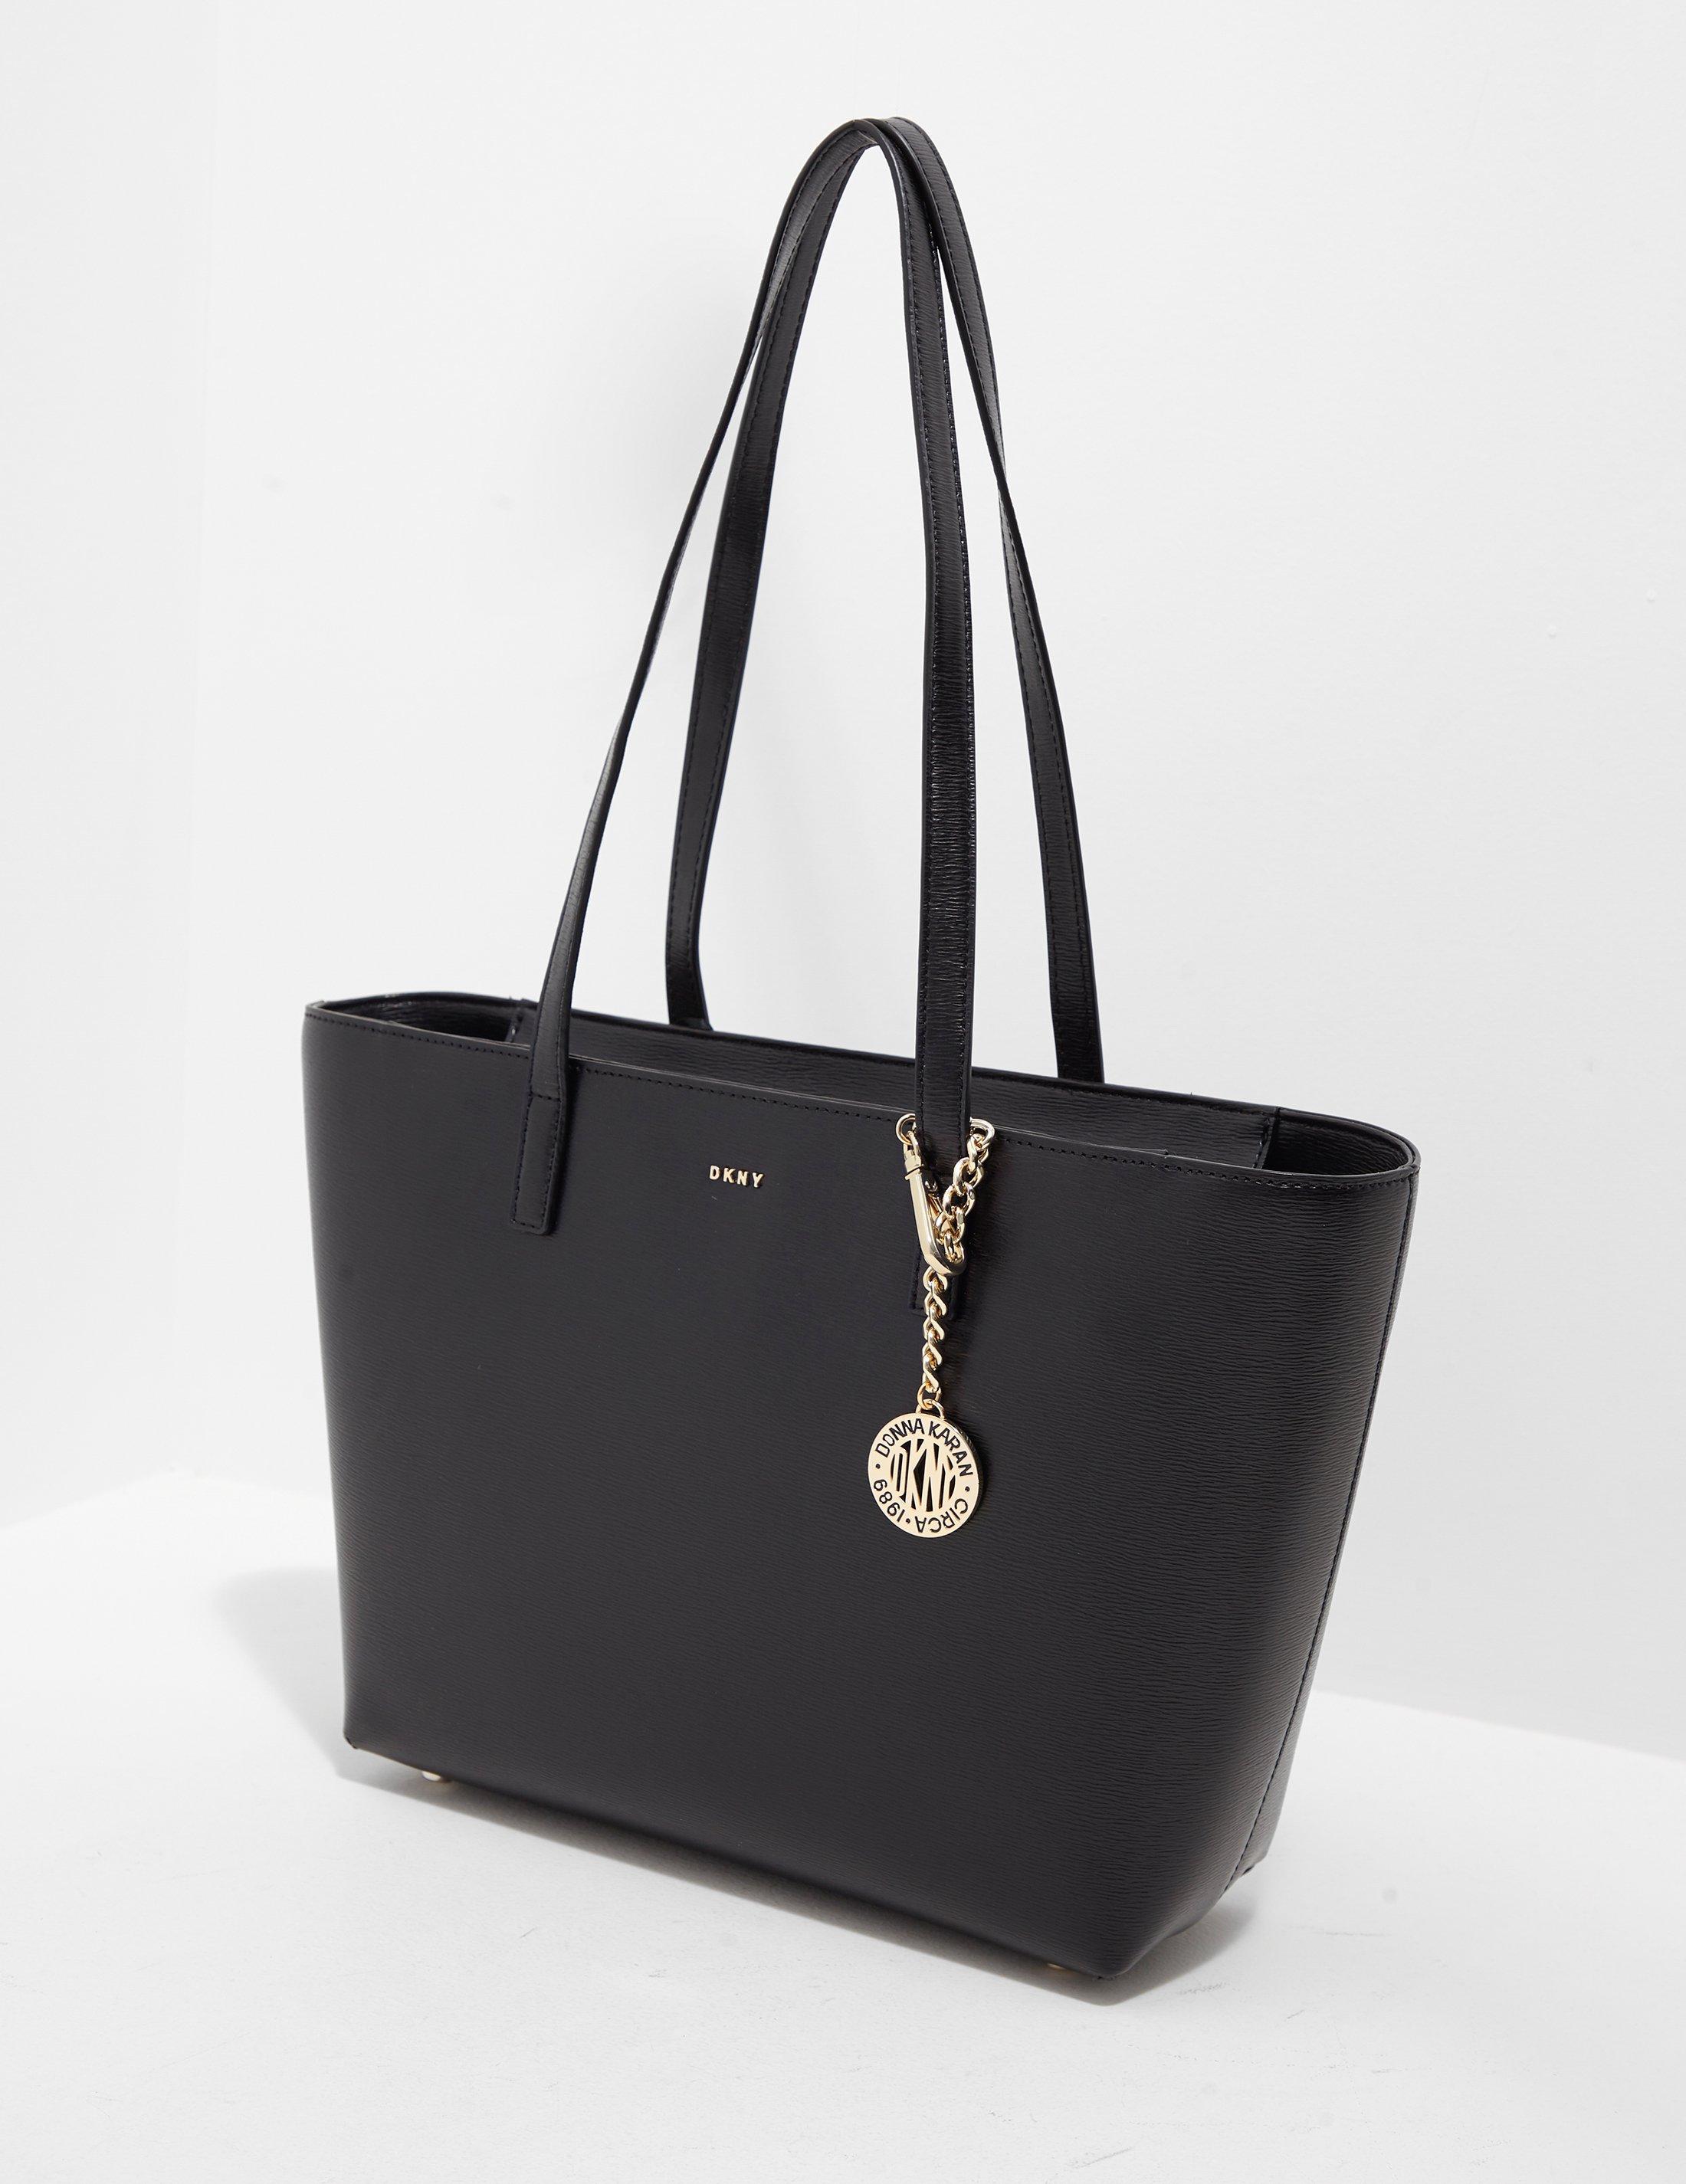 DKNY Women's Tote Bag Black | Lyst